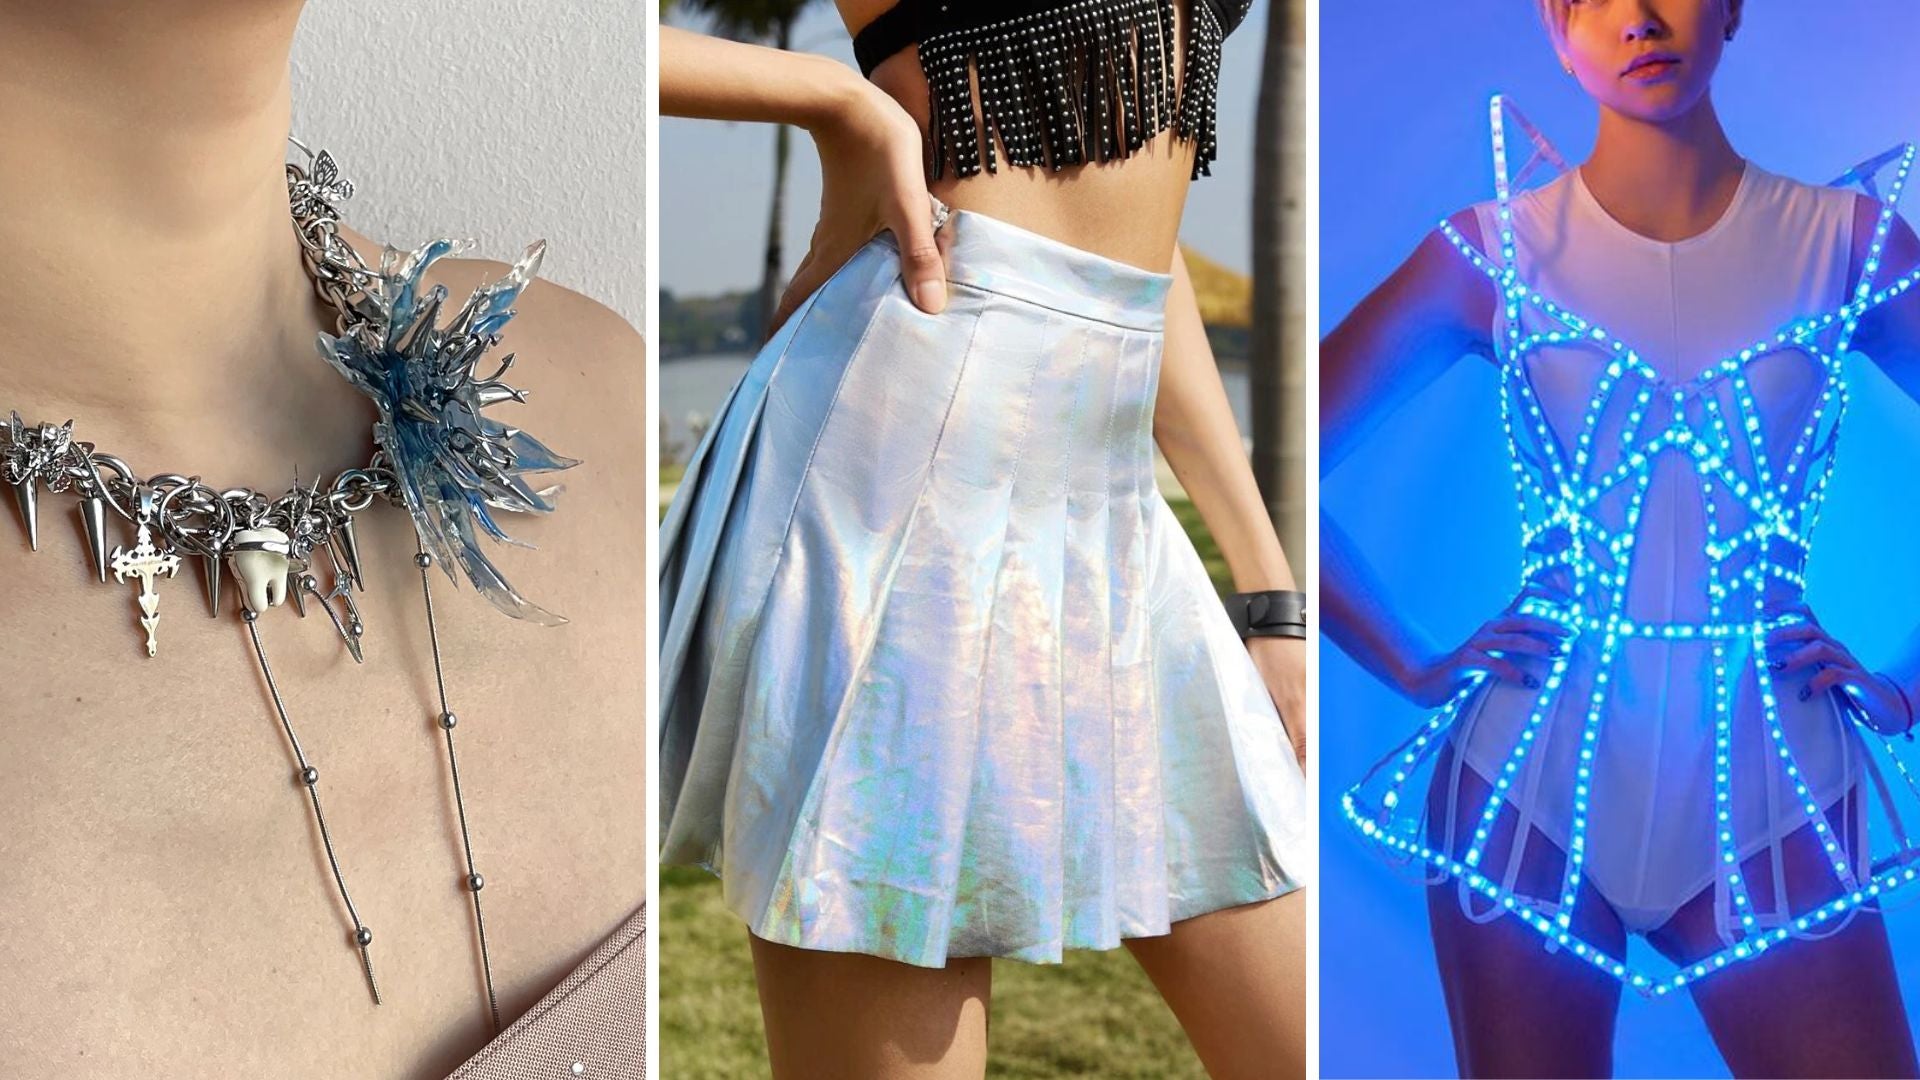 High-Tech Meets High Fashion: Cyberpunk Essentials For Summer